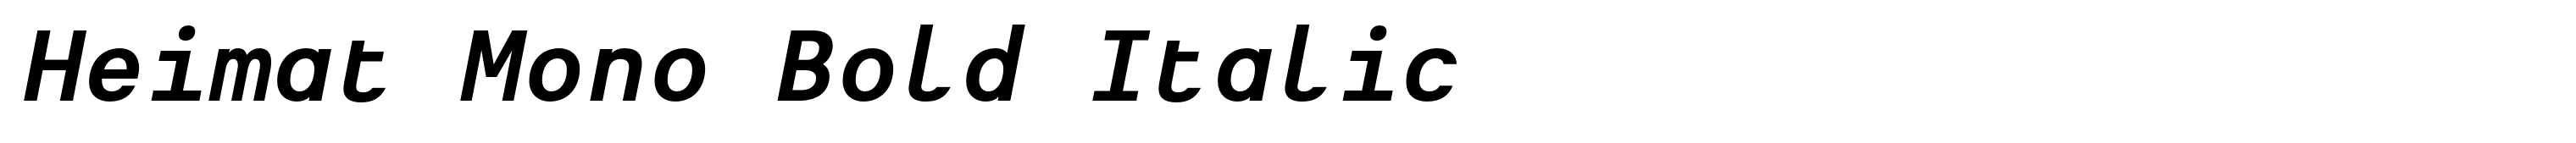 Heimat Mono Bold Italic